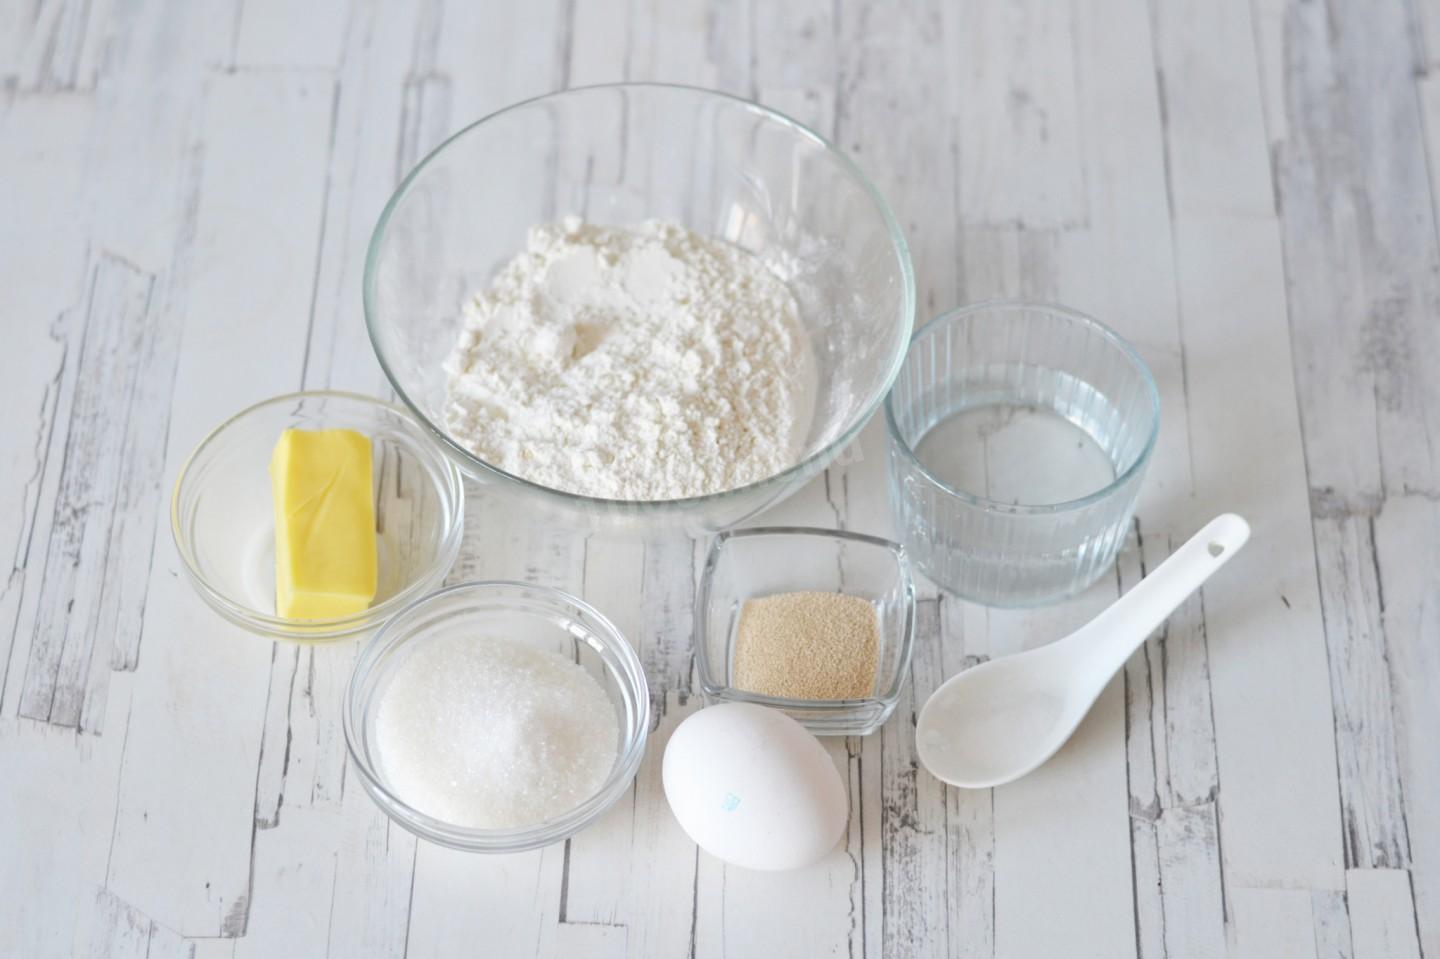 Мука соль. 80 Г муки. Мука сахар дрожжи вода яйца. Мука соль поделки. Рецепт мука вода сахар